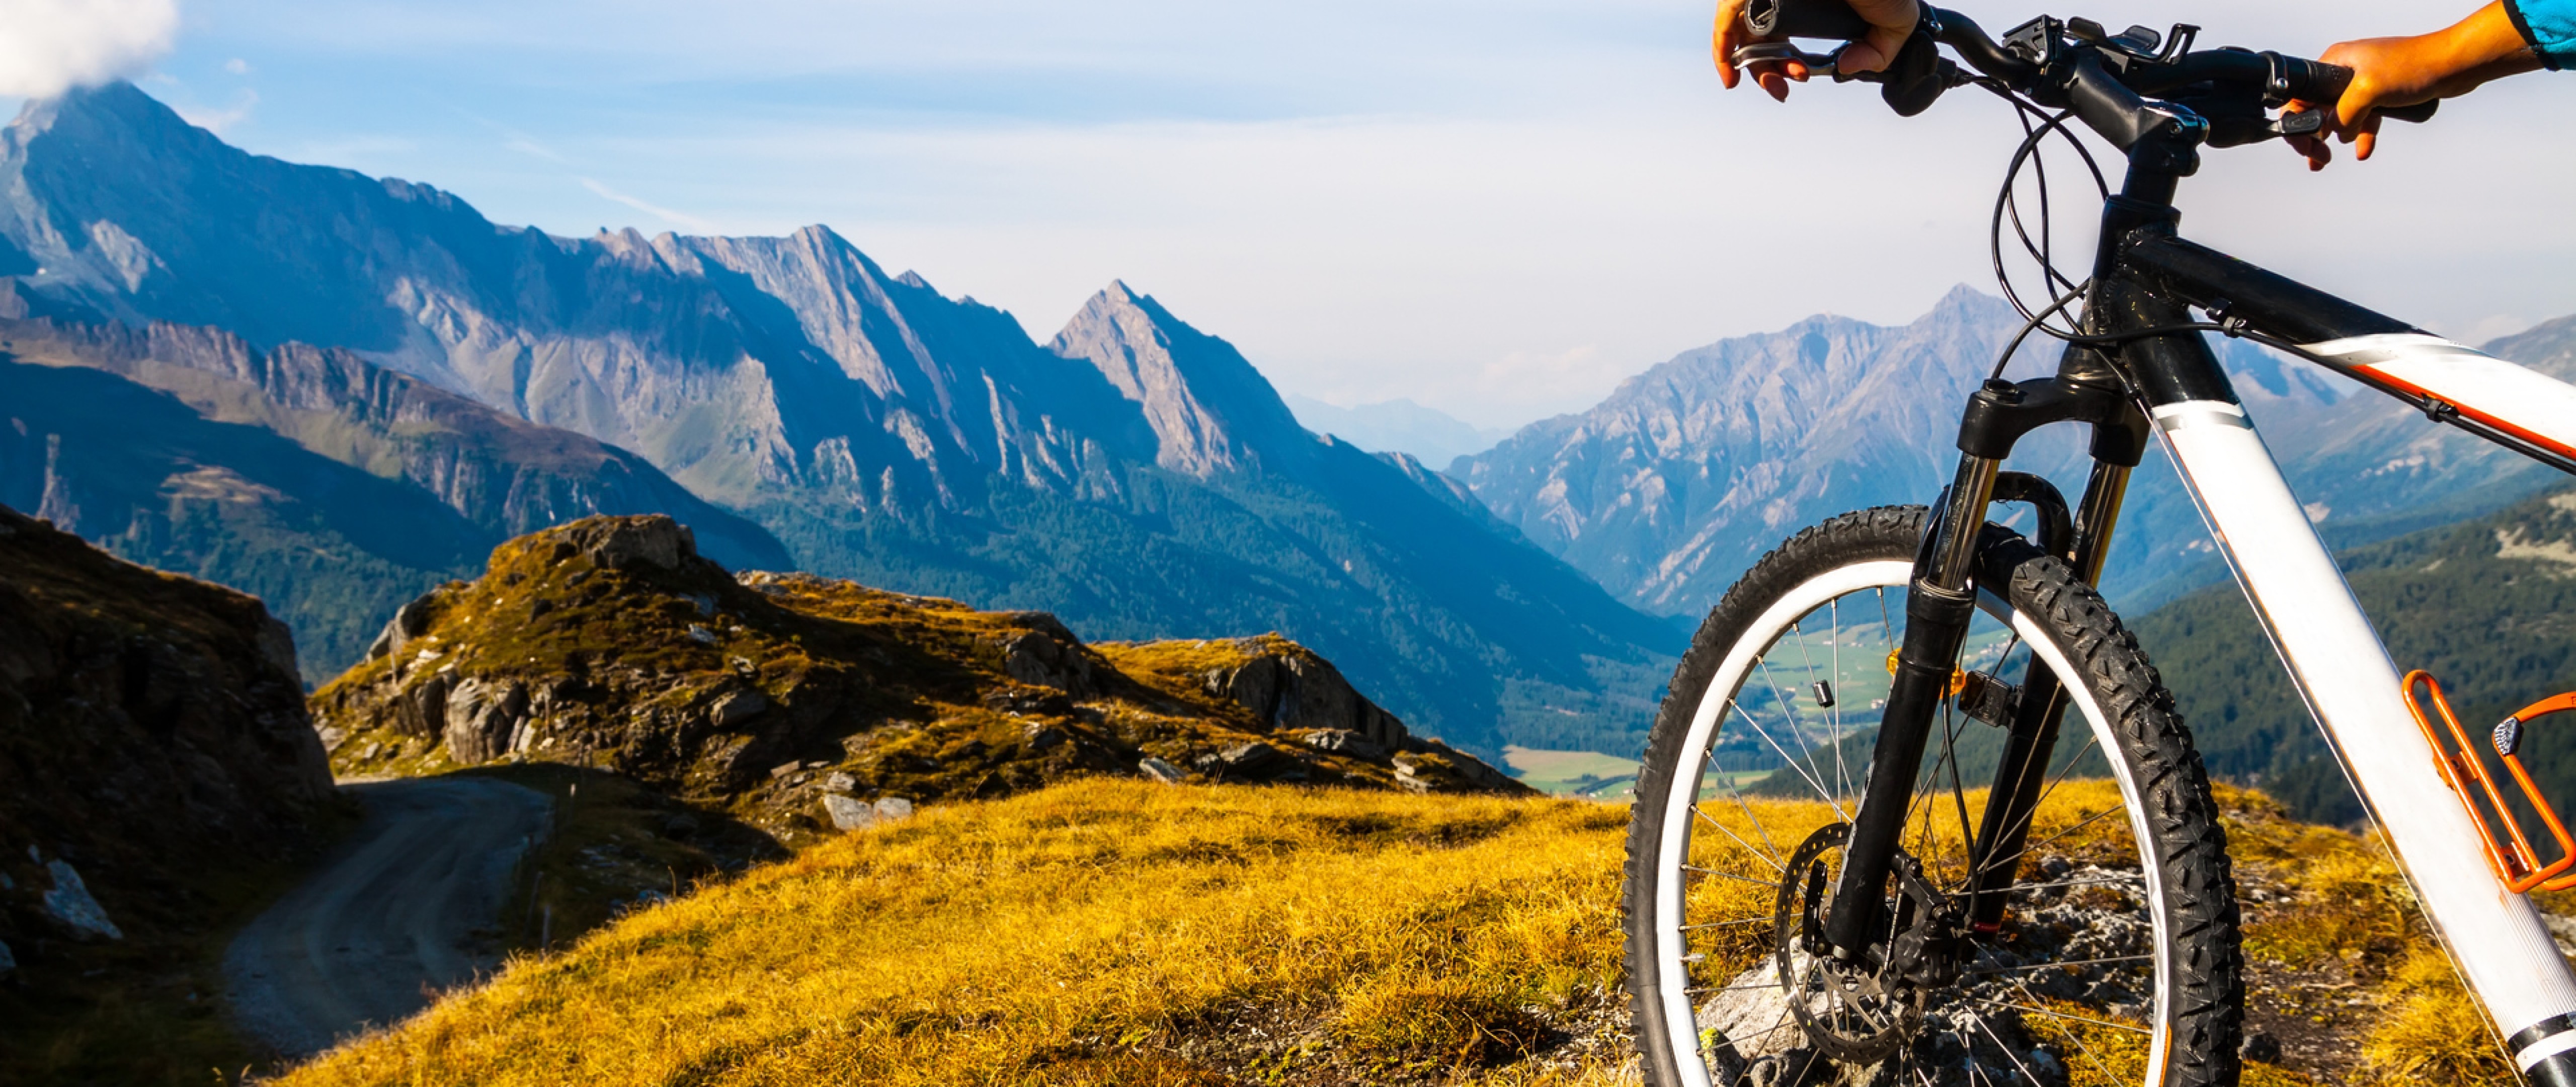 Mountain Bike Wallpaper For Desktop And Mobiles 4k Ultra HD Wide